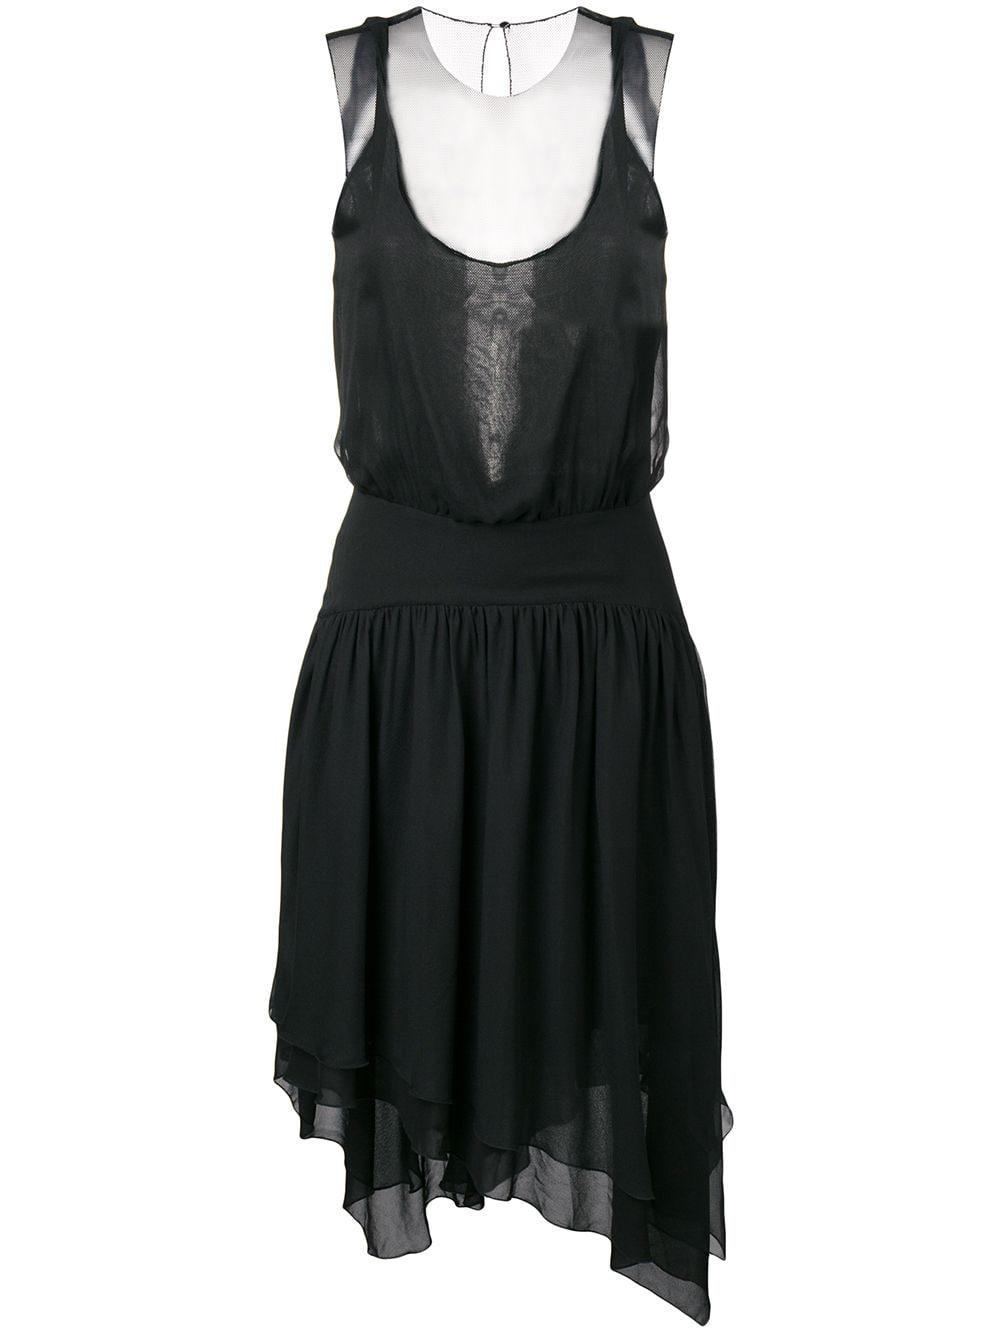 Karl Lagerfeld Silk Mesh Evening Dress in Black - Lyst